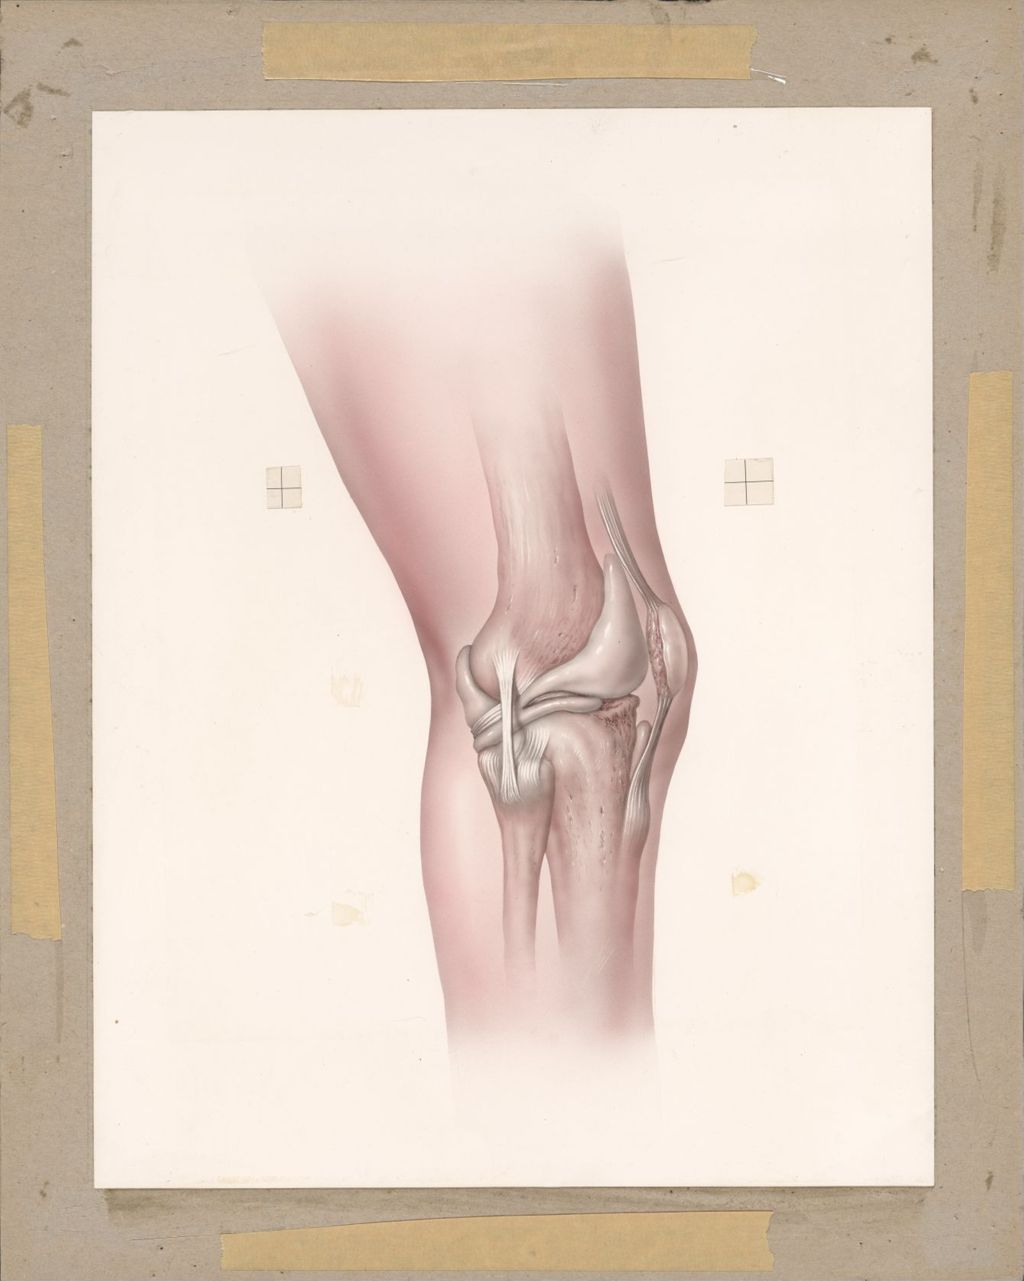 Miniature of Normal capsule knee joint